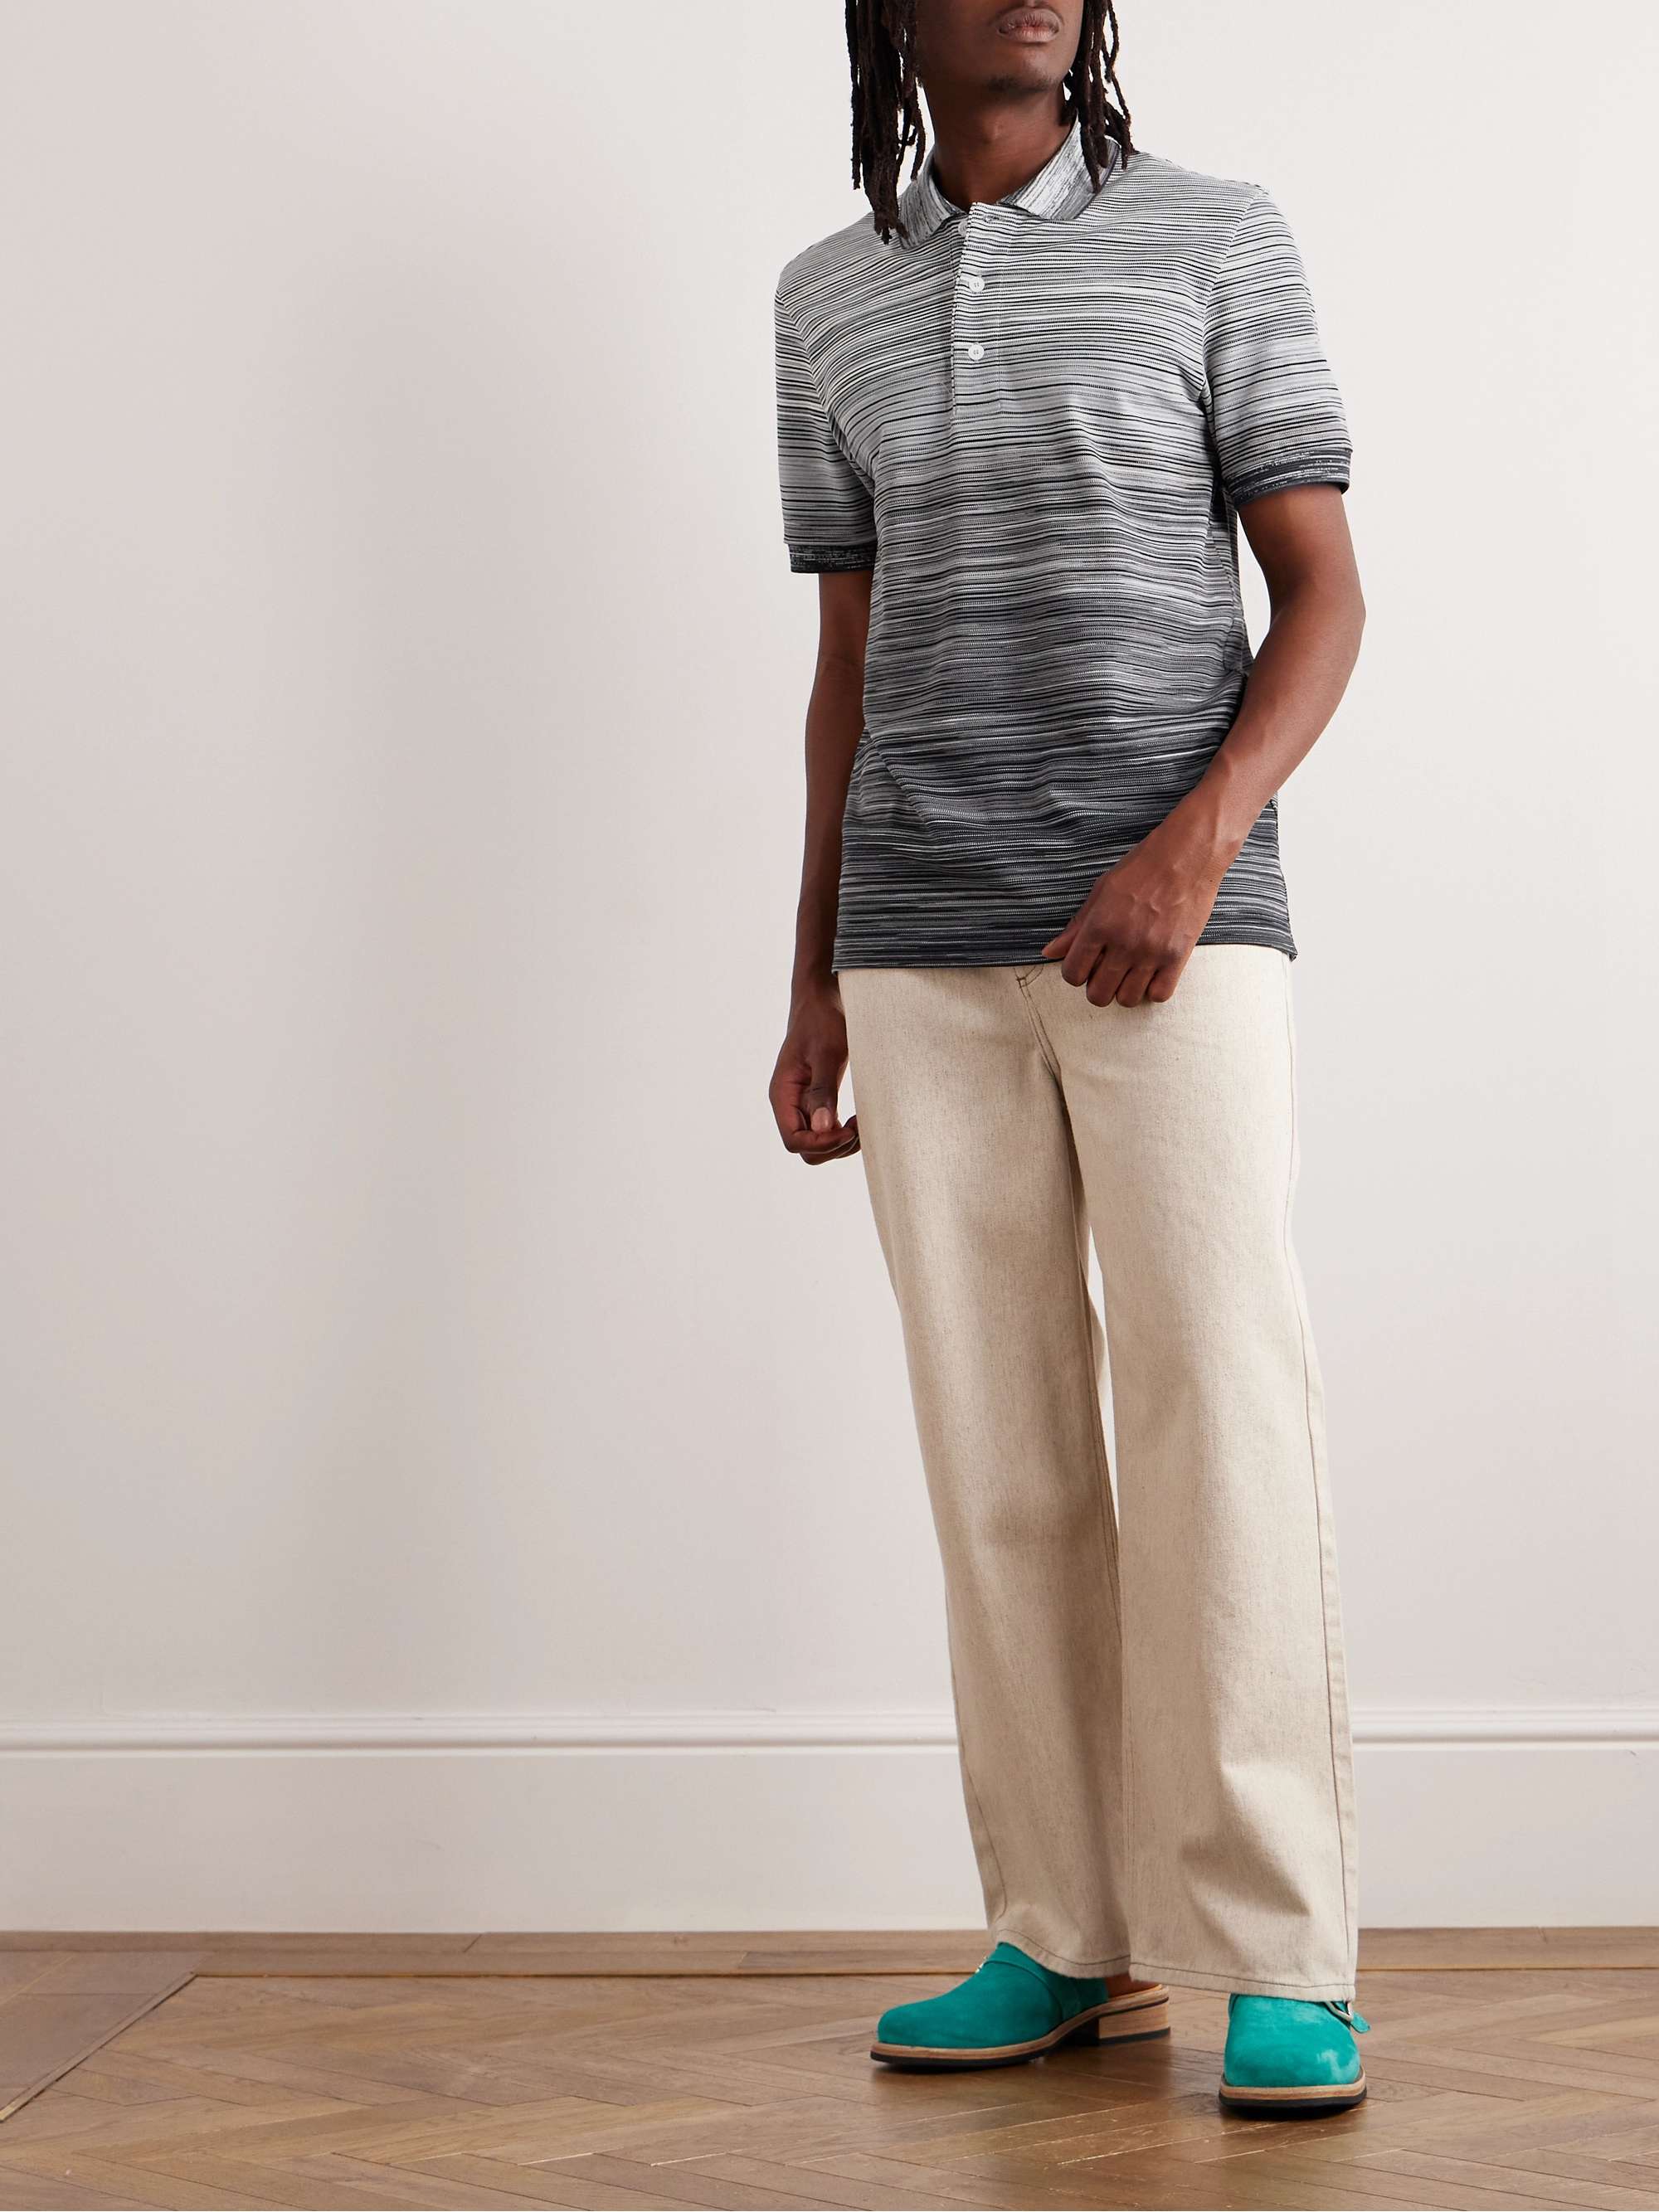 MISSONI Striped Space-Dyed Cotton-Piqué Polo Shirt for Men | MR PORTER